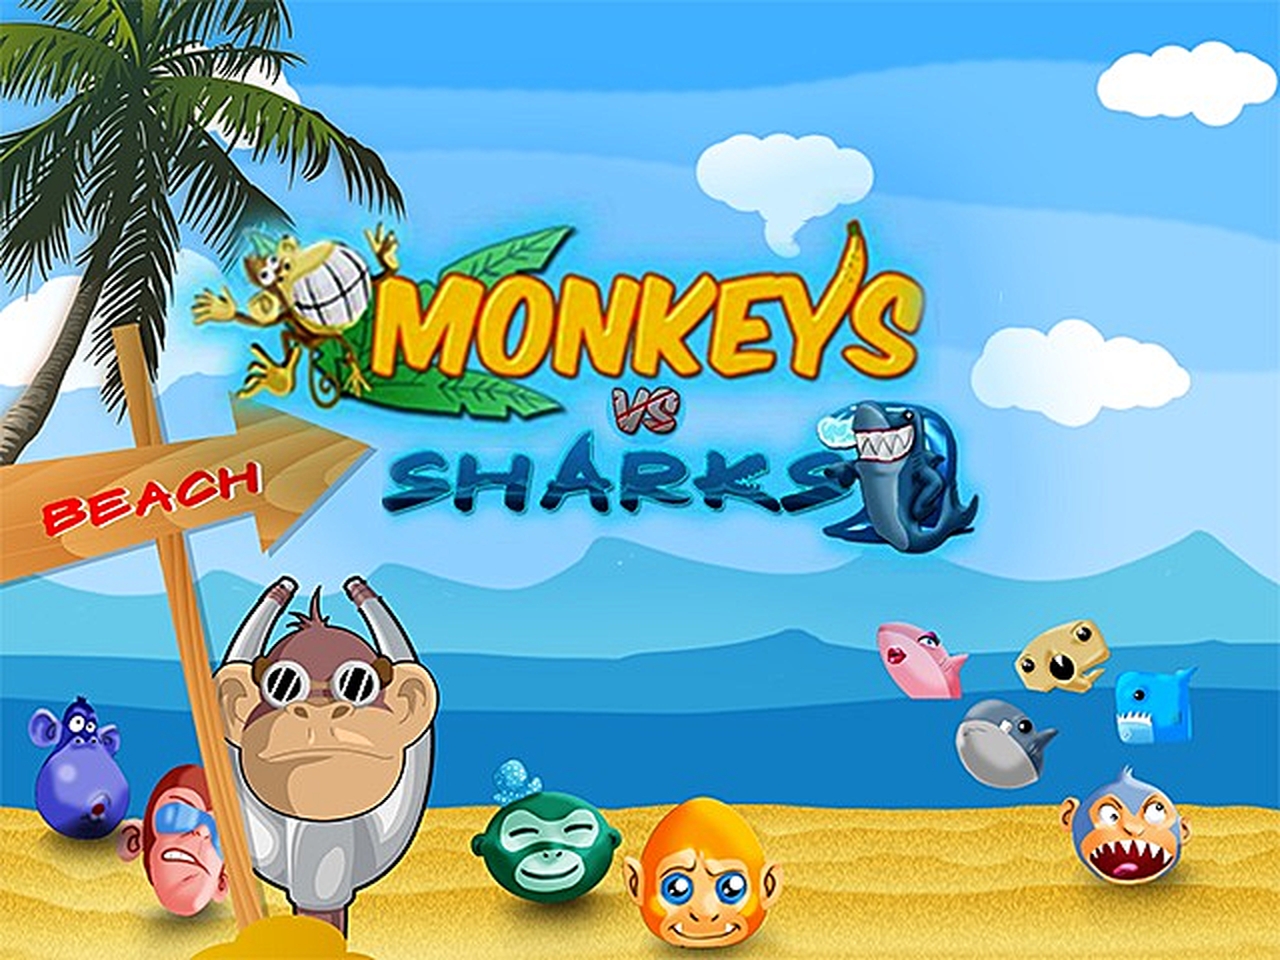 Monkeys vs Sharks HD demo